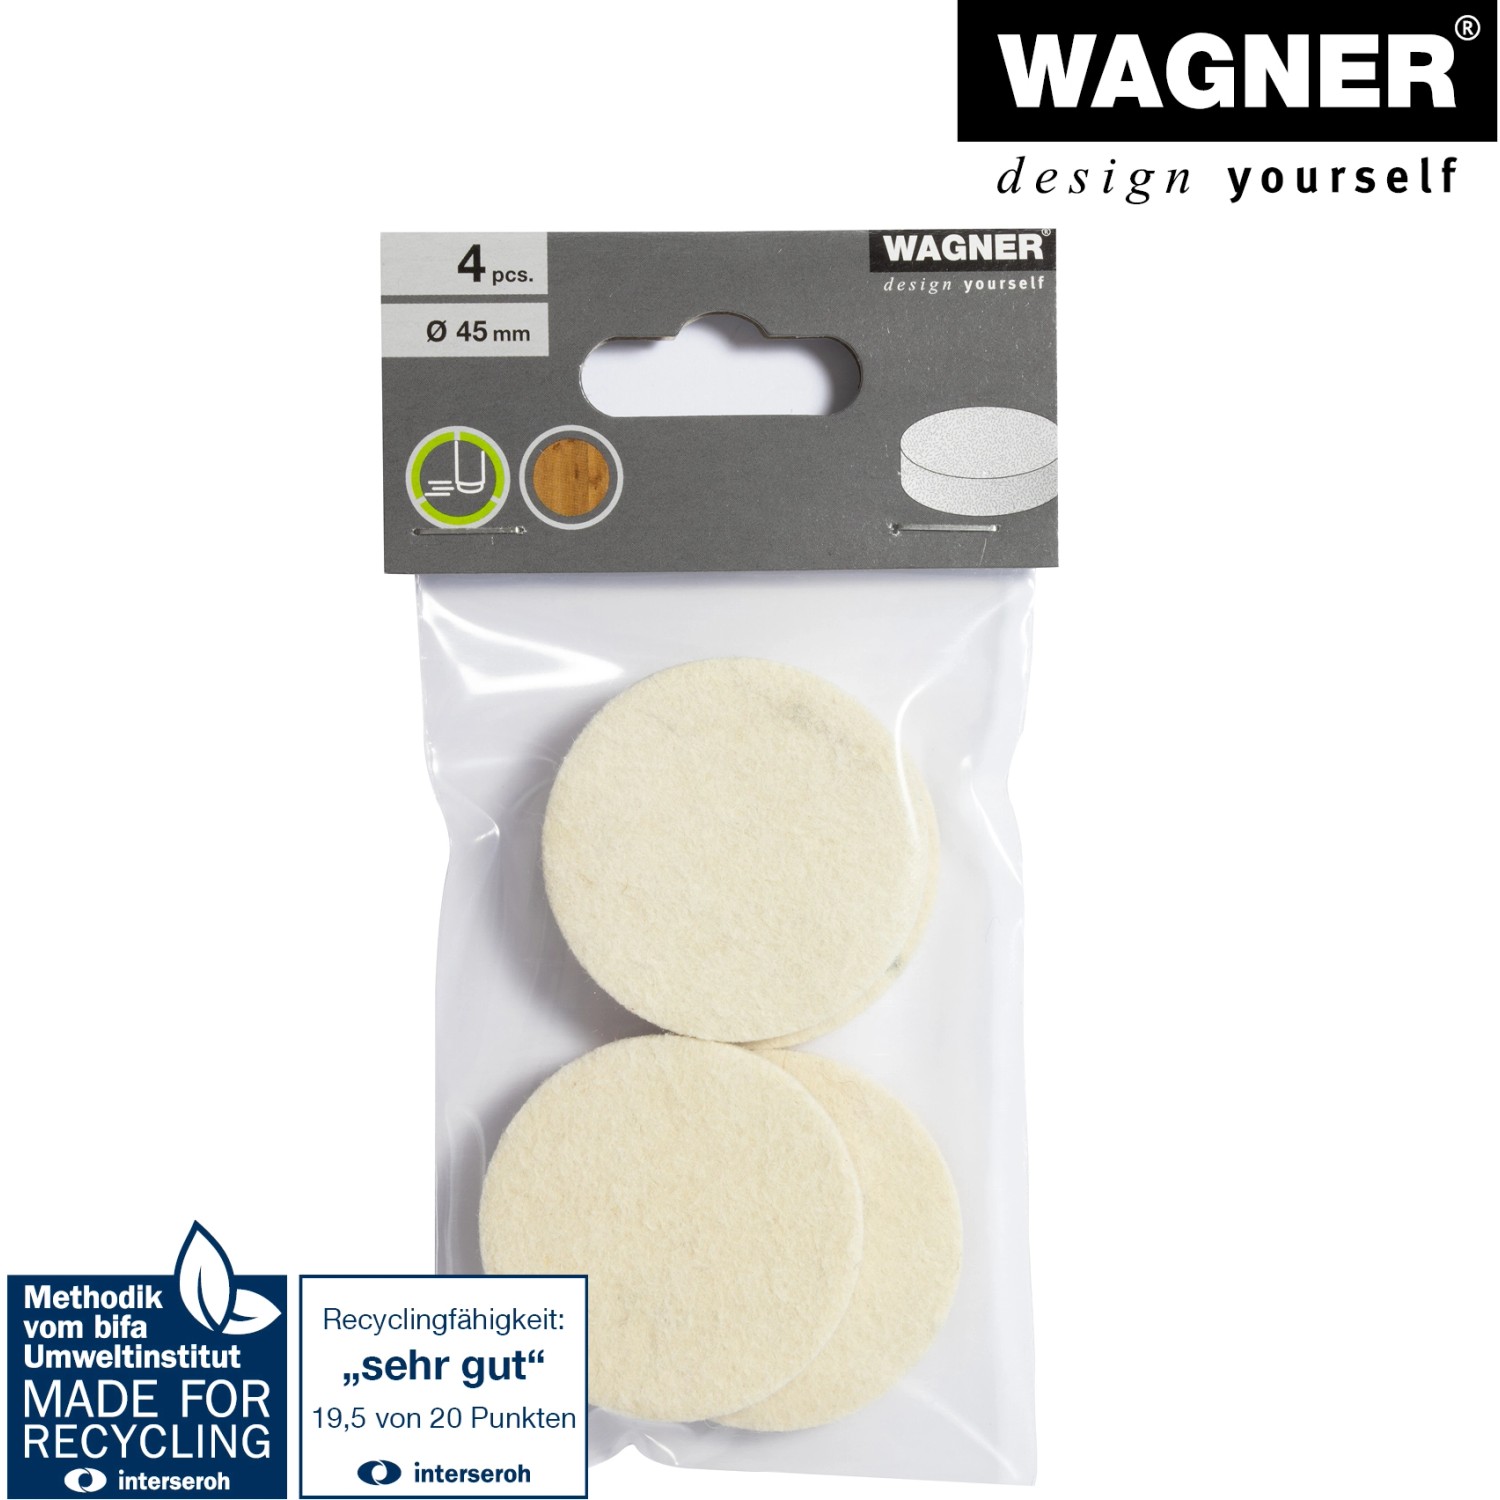 Wagner Filz Soft Selbstklebend Weiß Ø 45 mm x 60 mm 4 Stück kaufen bei OBI